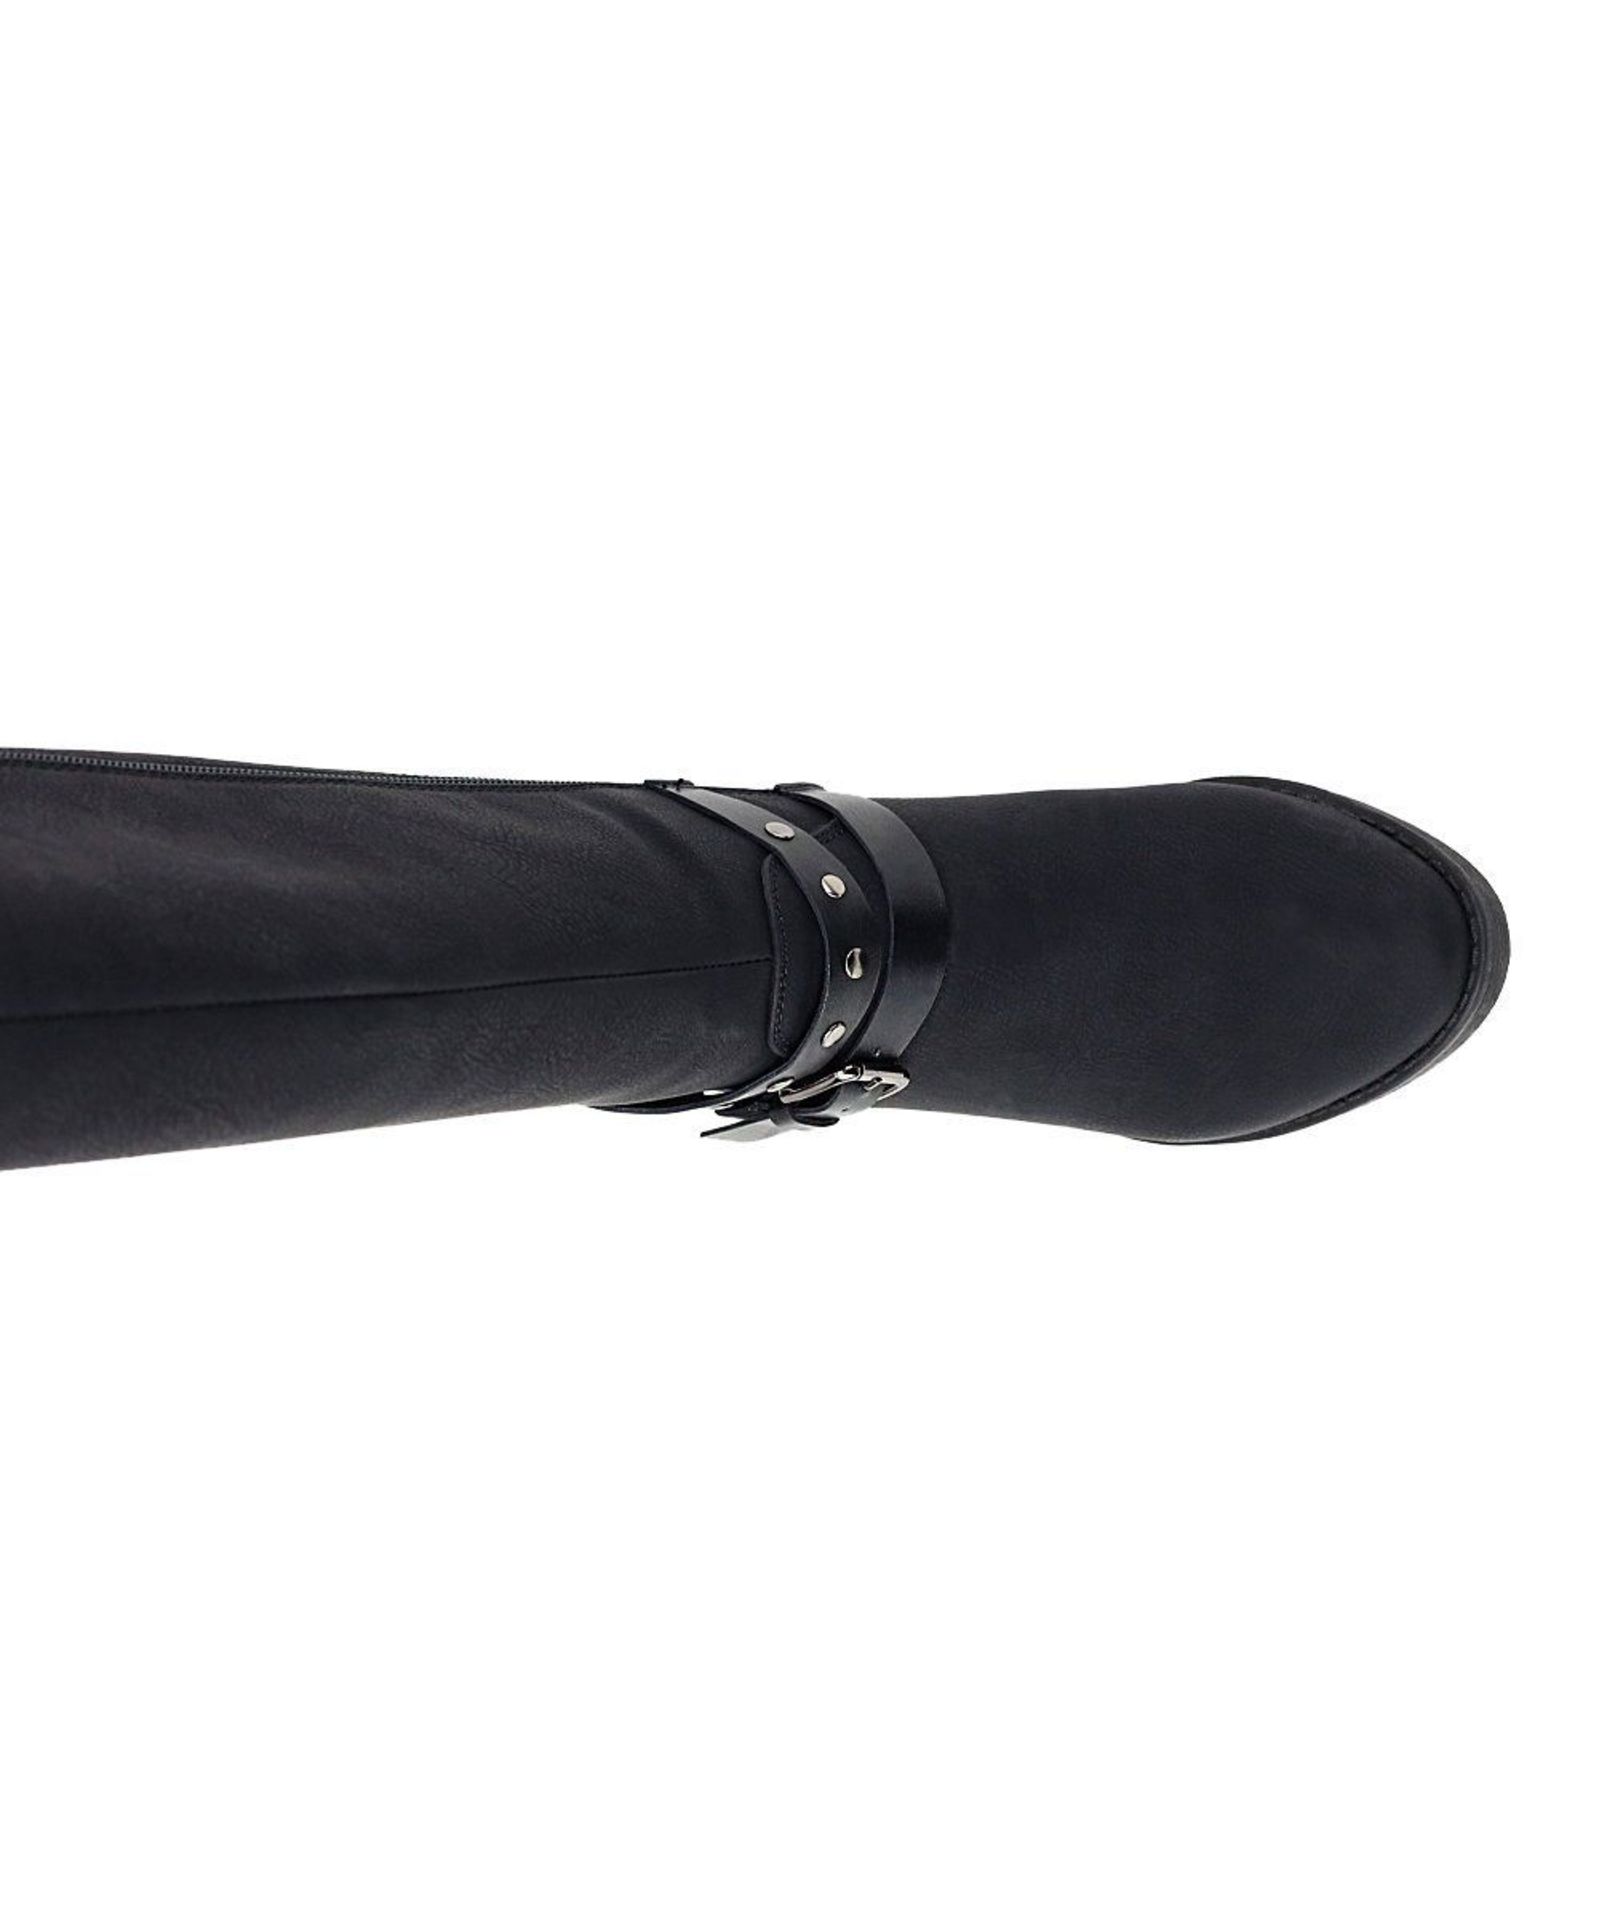 OLIVIA MILLER Black Freeport Riding Boot (Uk Size 6:Us Size 8) (New with box) [Ref: 50171948-I-003] - Image 5 of 5